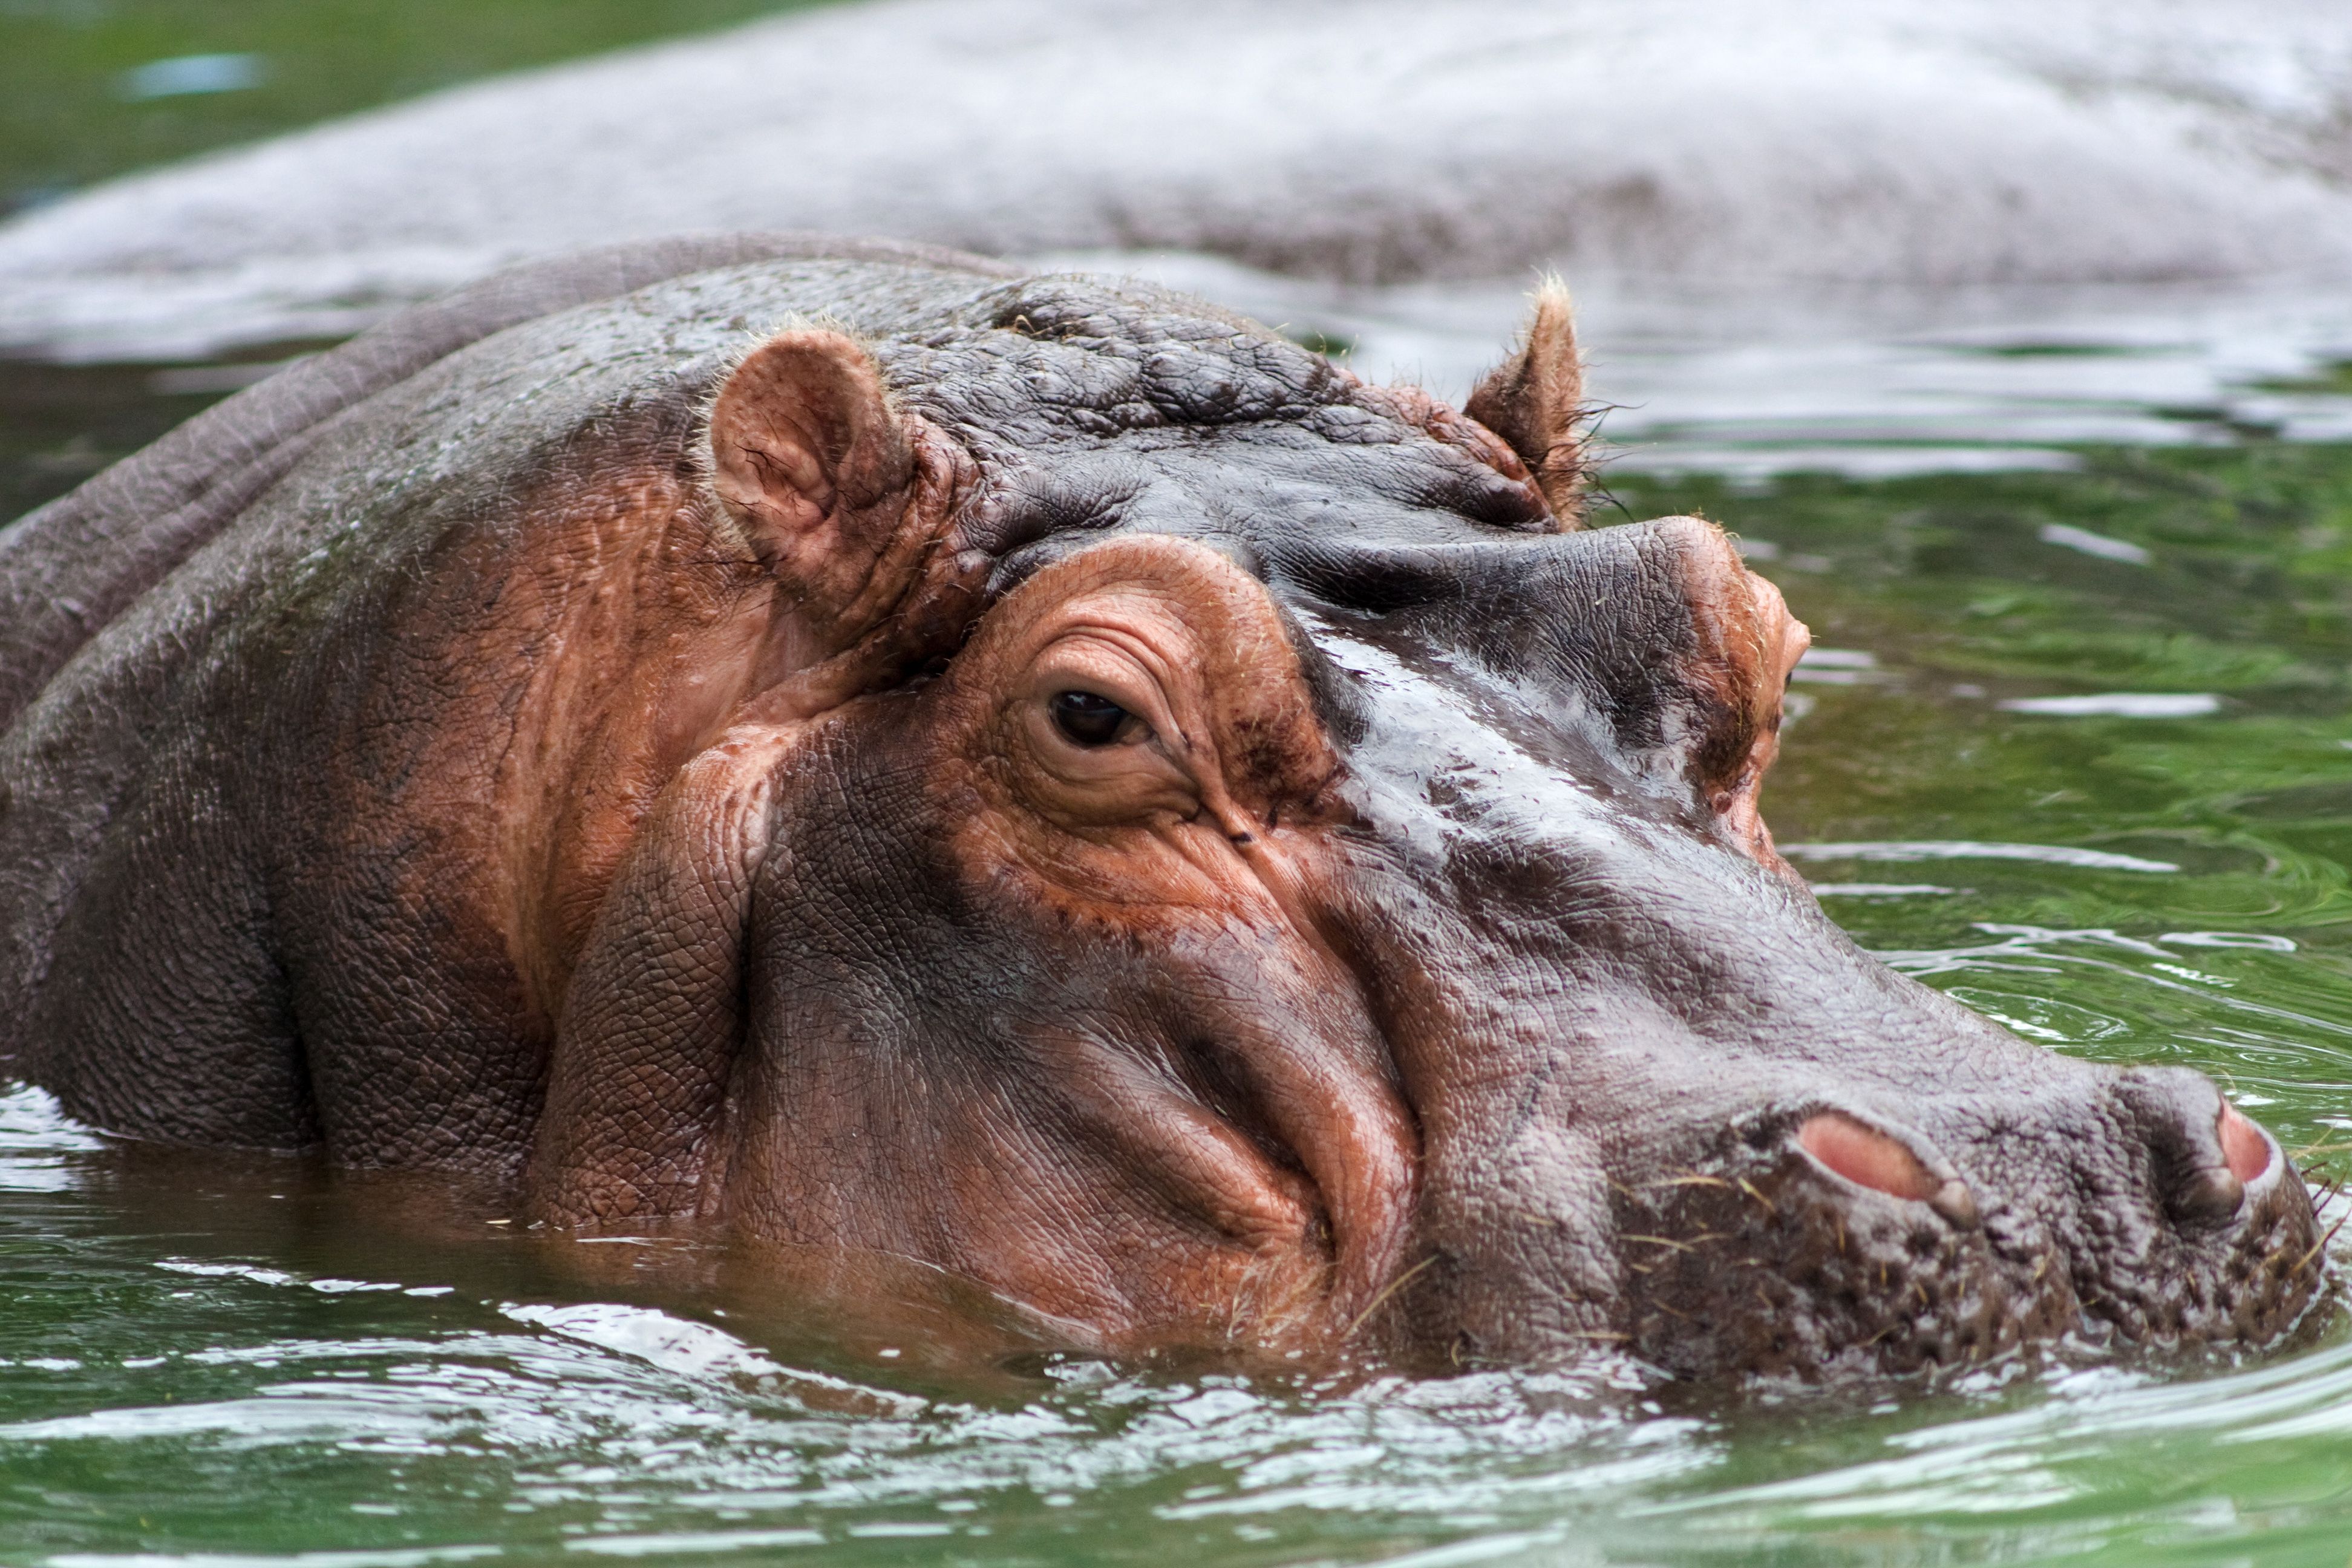 Hippopotamus Wallpaper Image Photo Picture Background